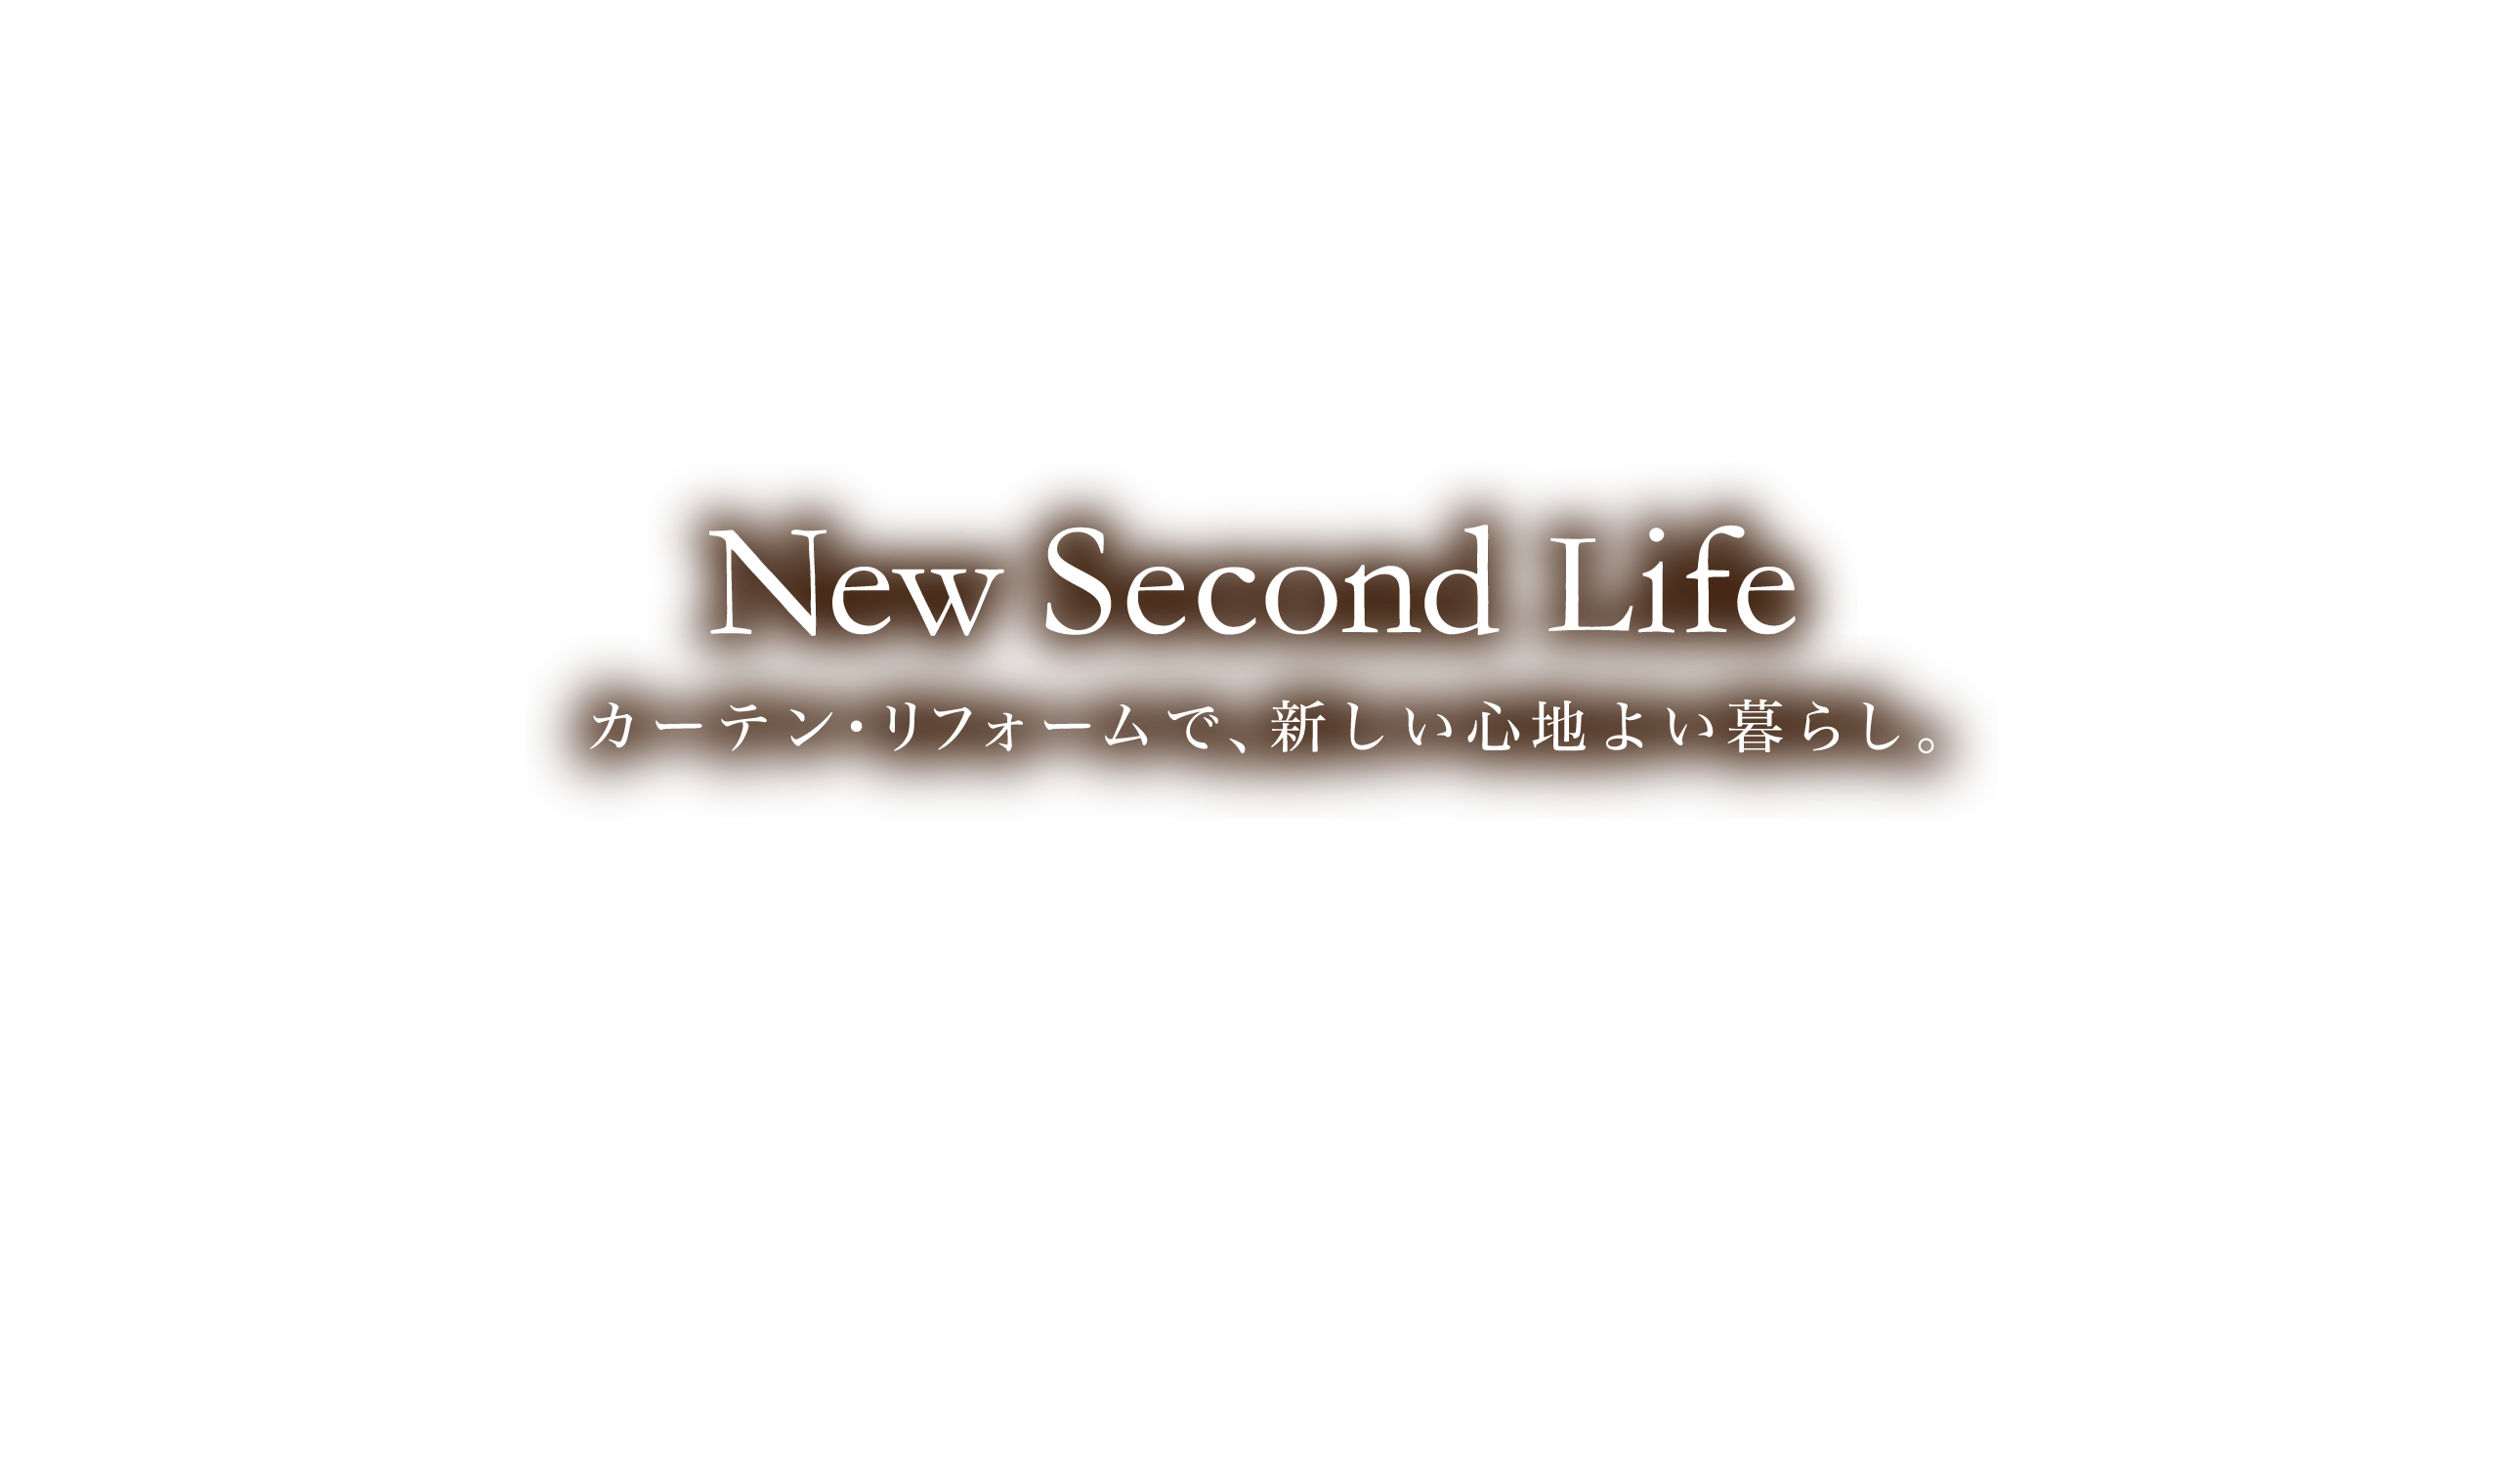 New Second Life カーテン・リフォームで、新しい心地よい暮らし。